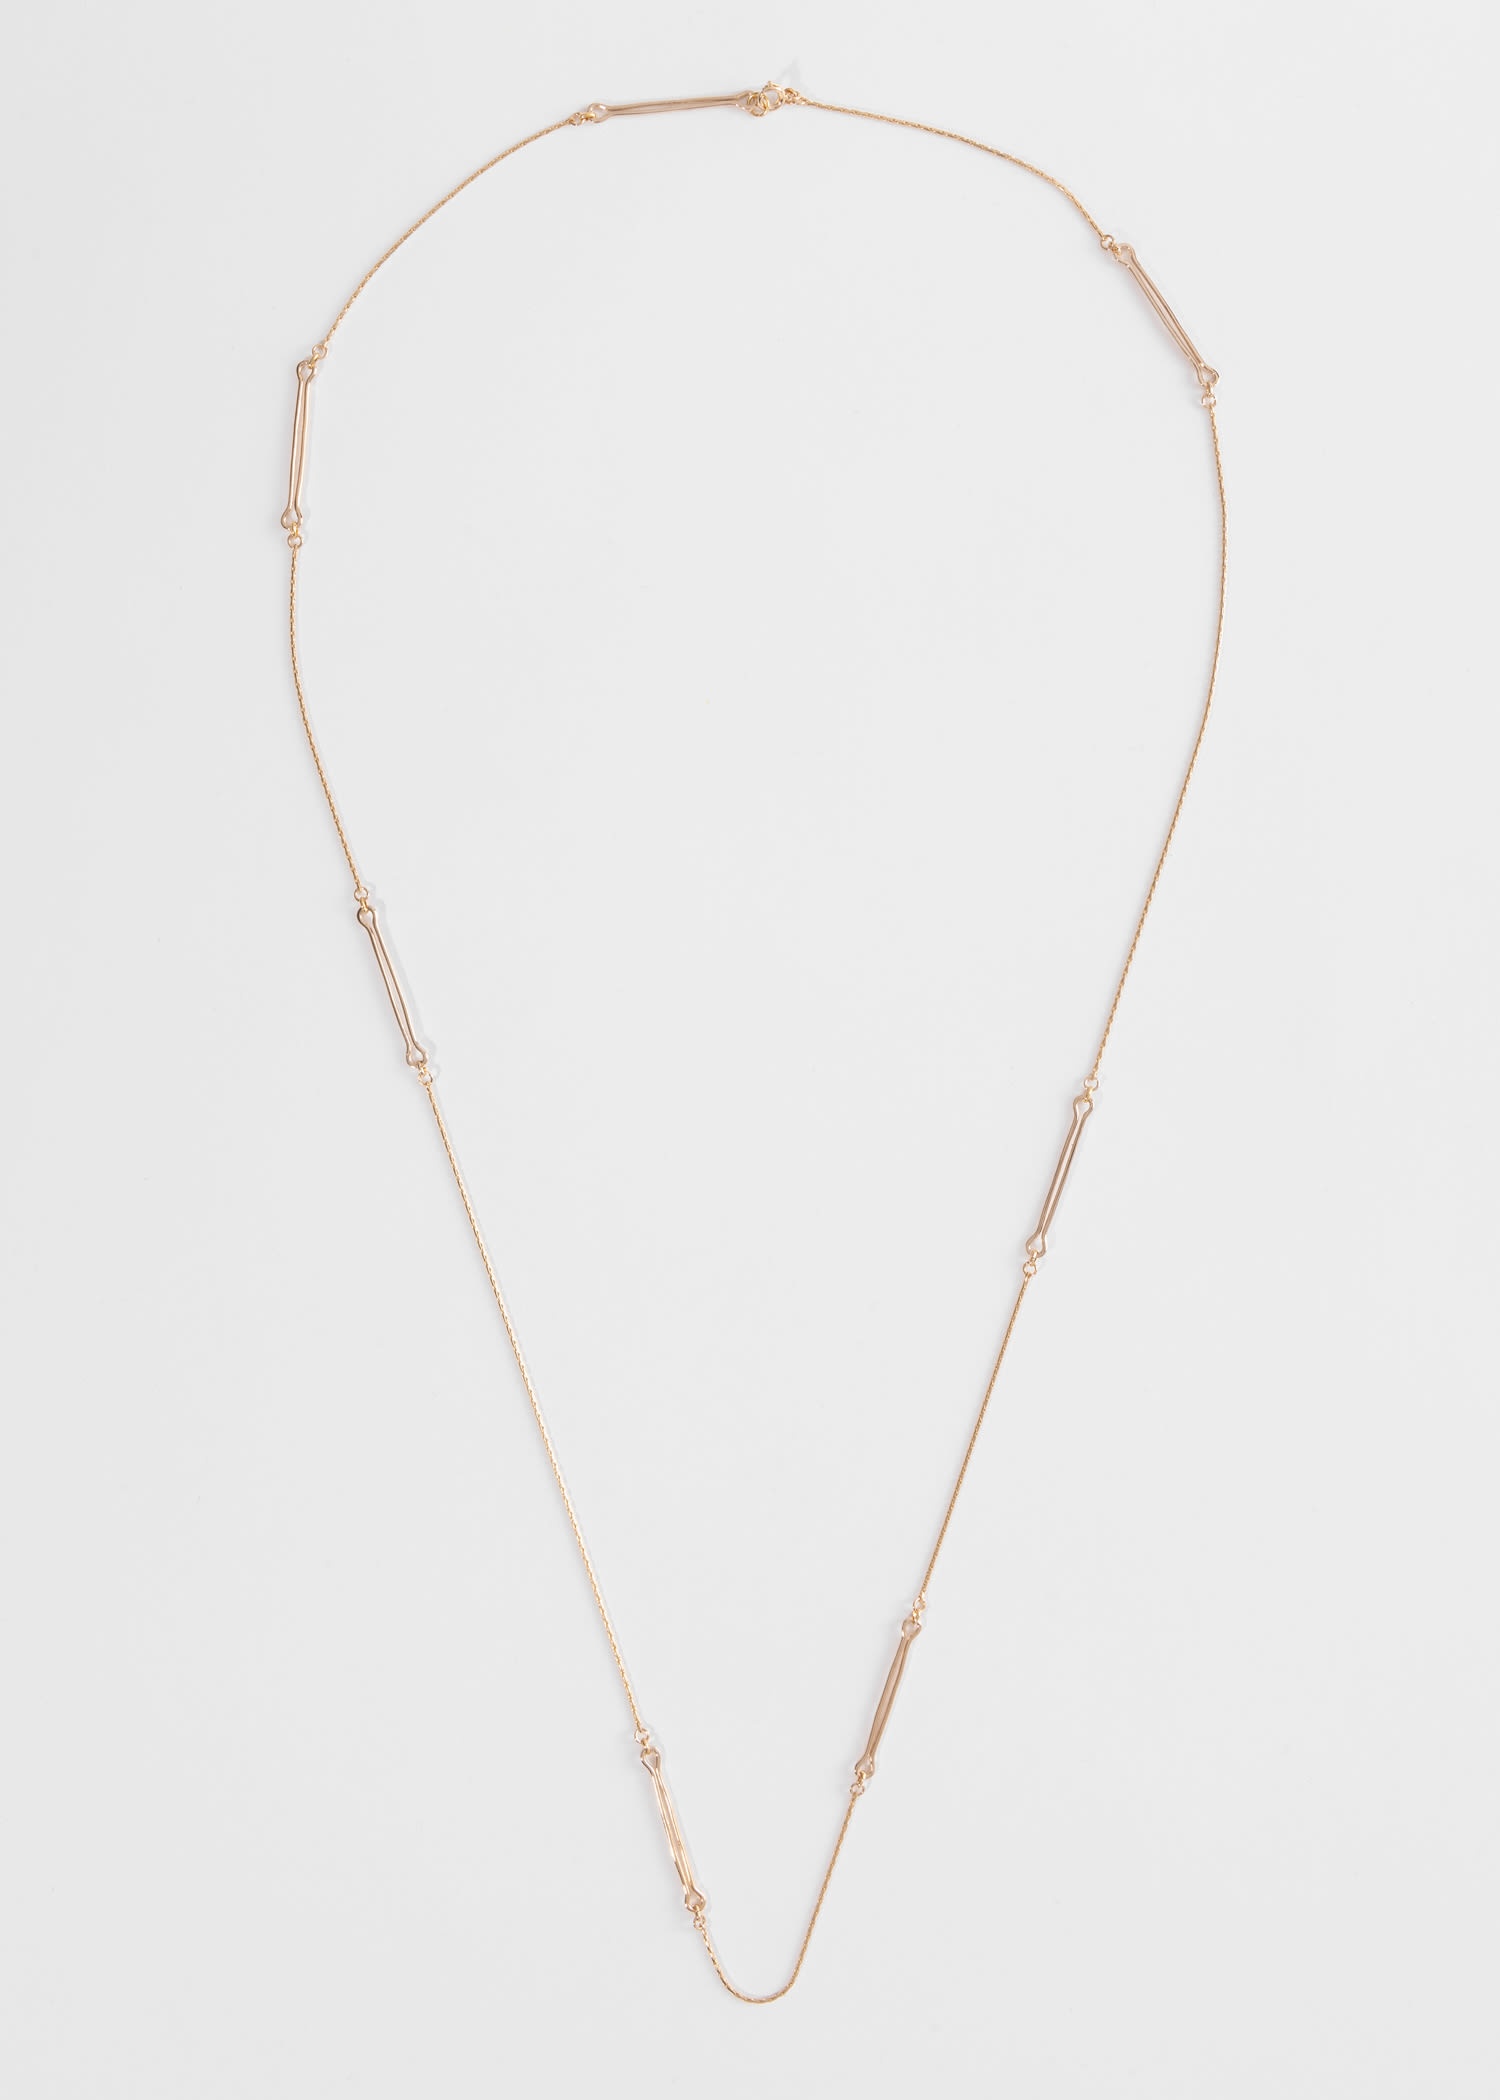 'Iliana' Long Link Necklace by Helena Rohner - 2